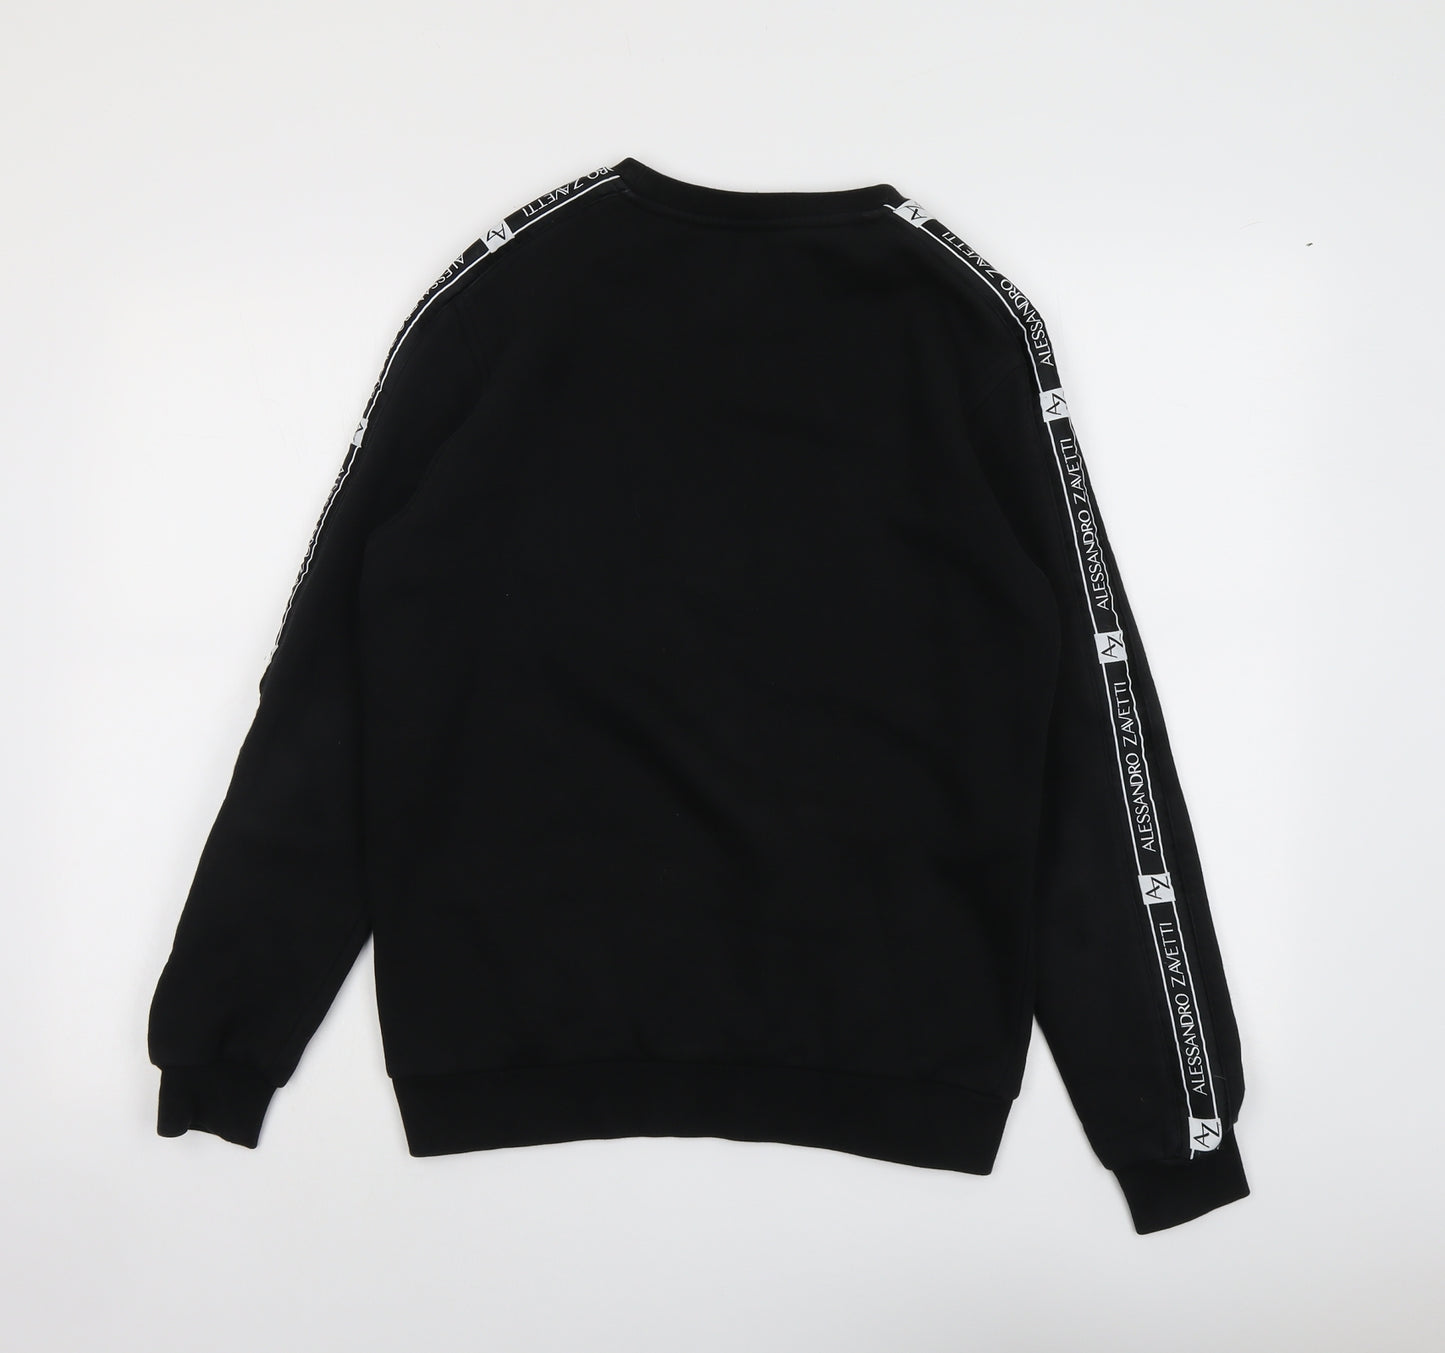 Alessandro Mens Black Cotton Pullover Sweatshirt Size S